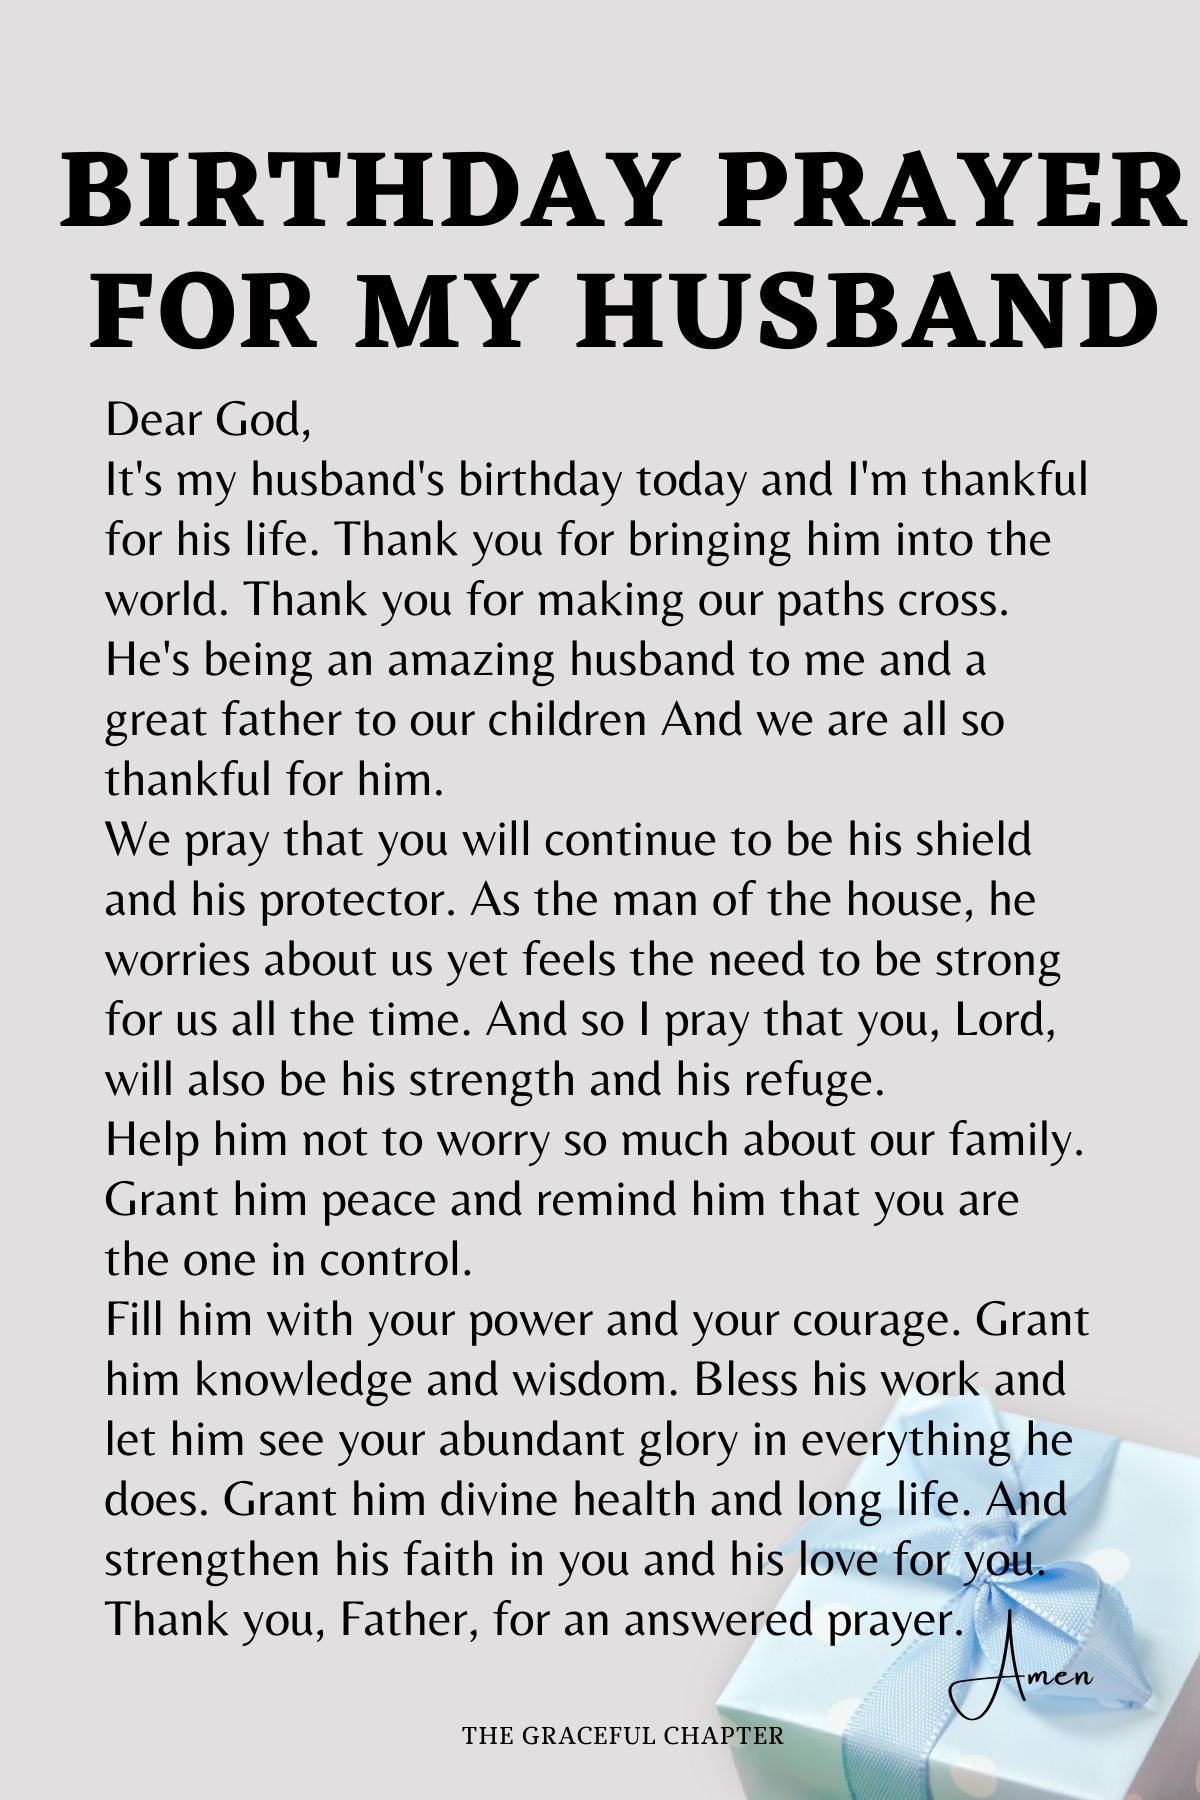 Birthday prayer for my husband